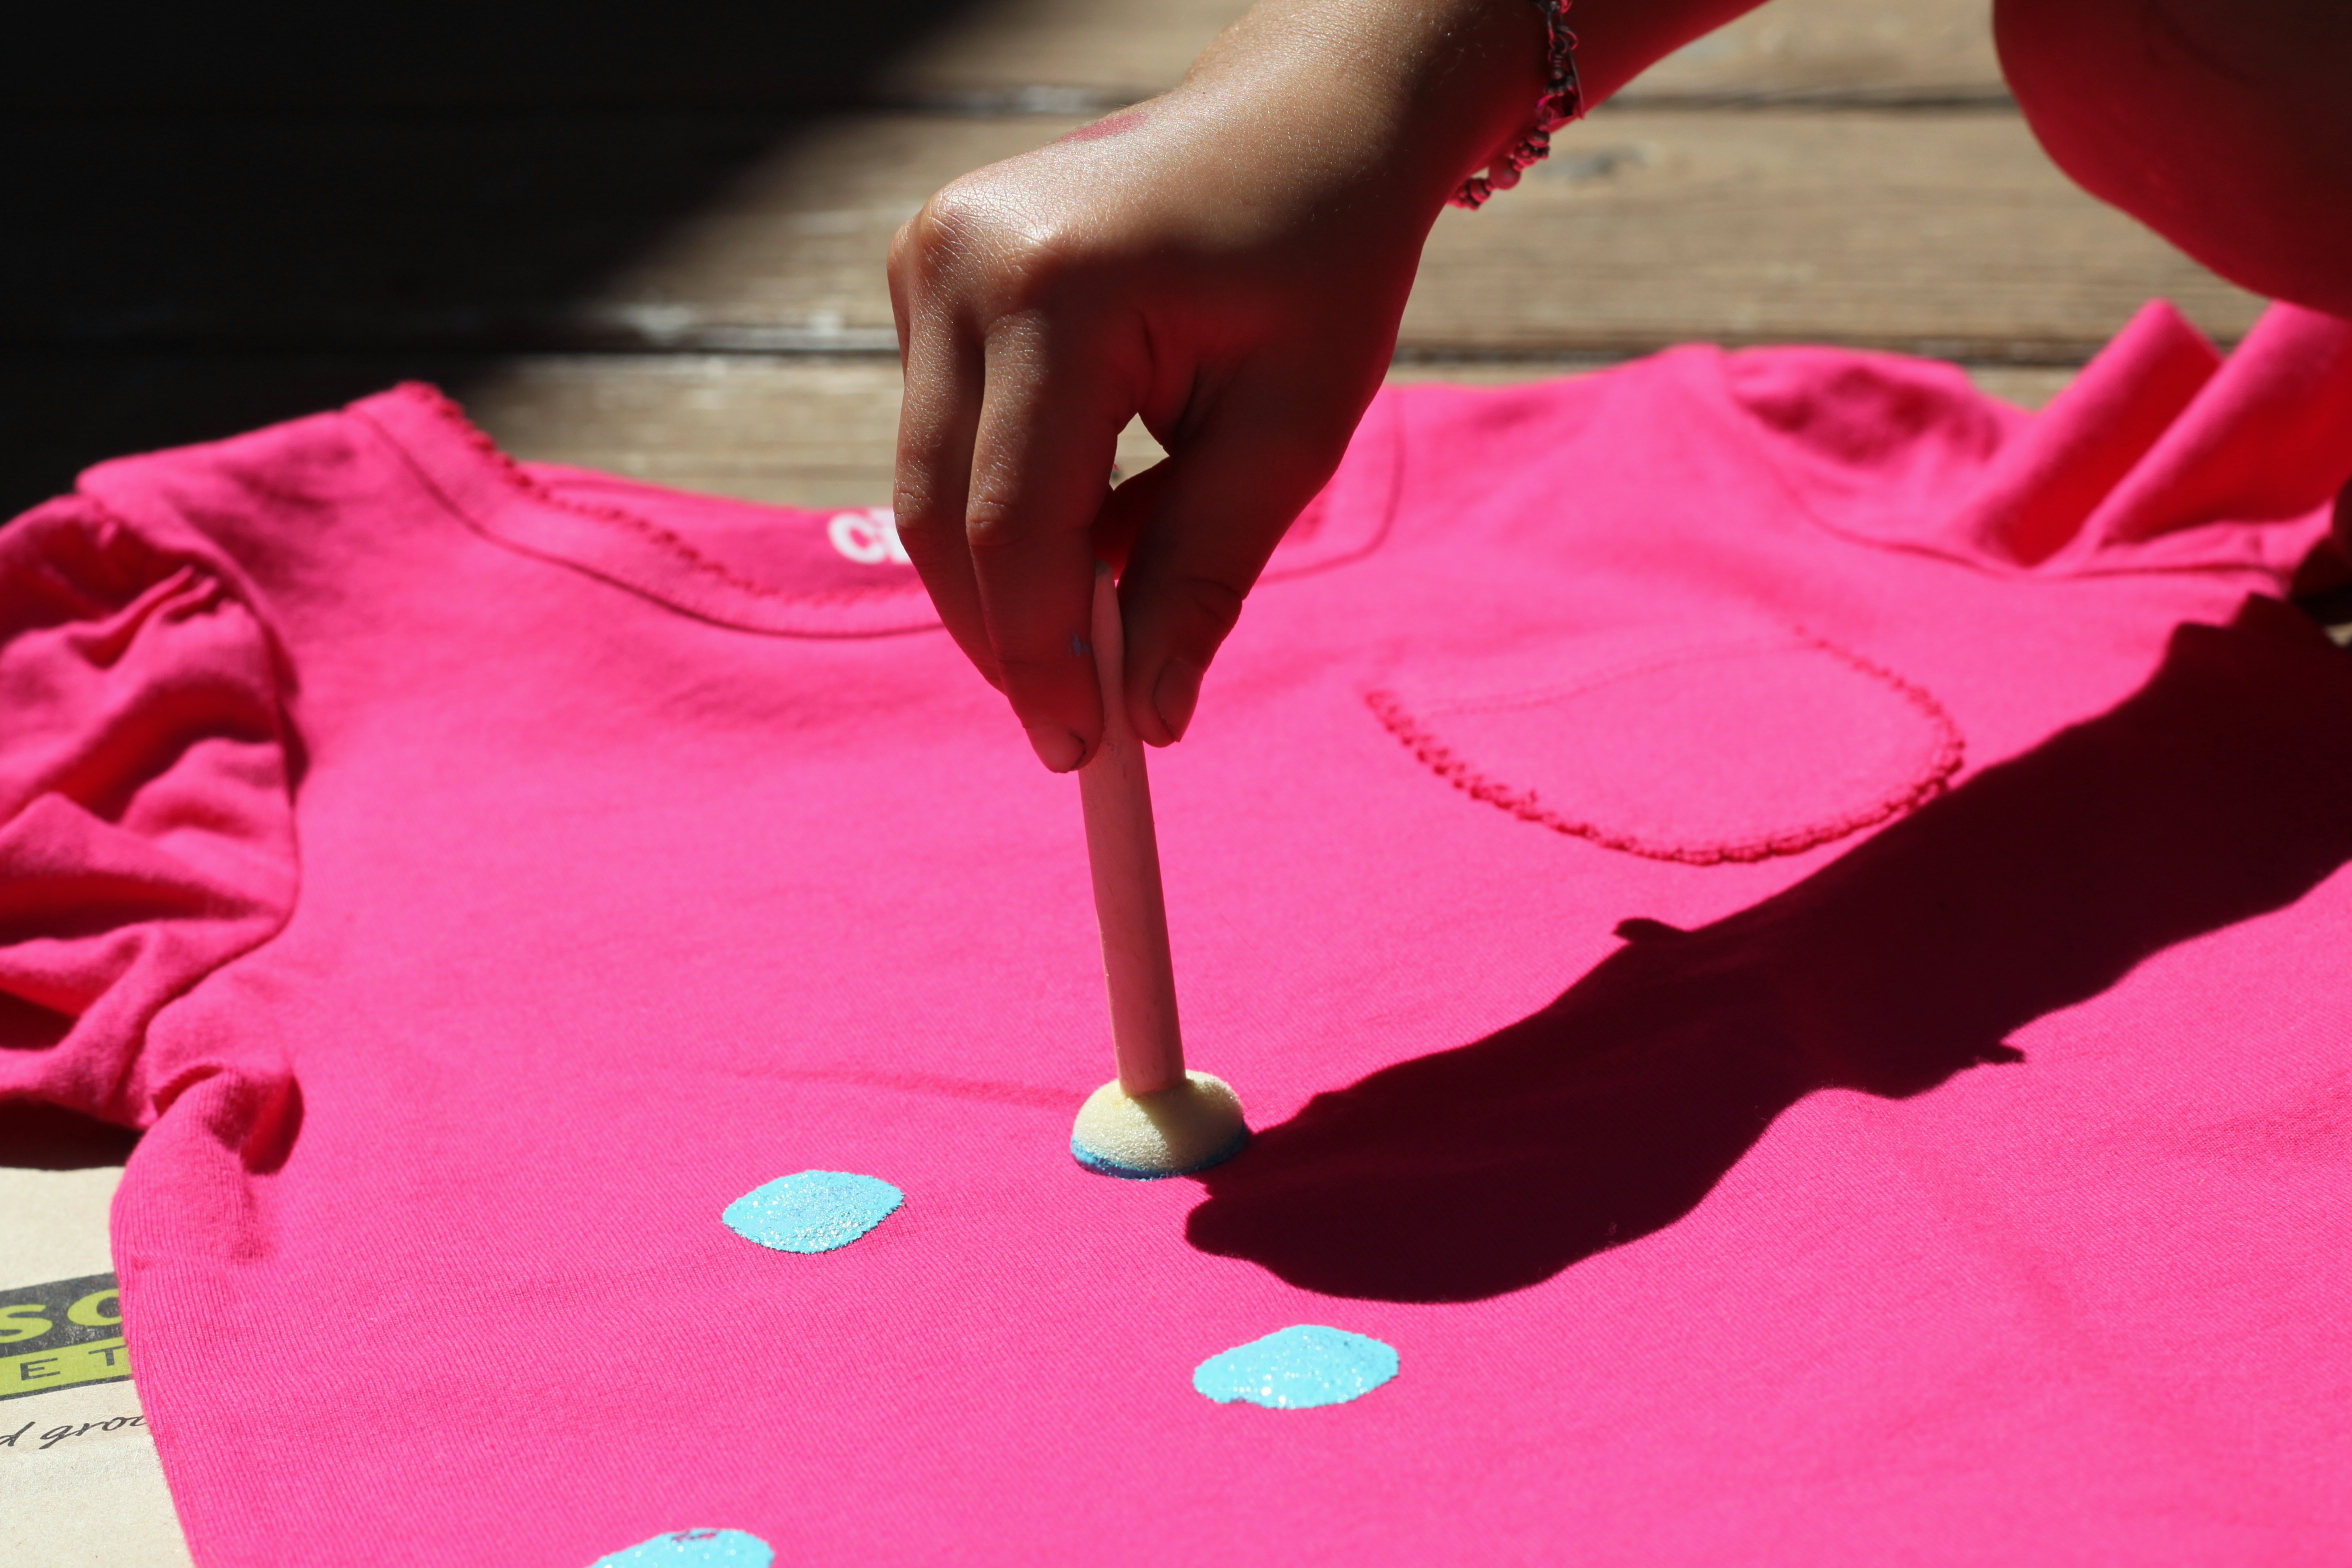 DIY Polka Dot Shirt in Under an Hour (Easy!) - DIY Candy